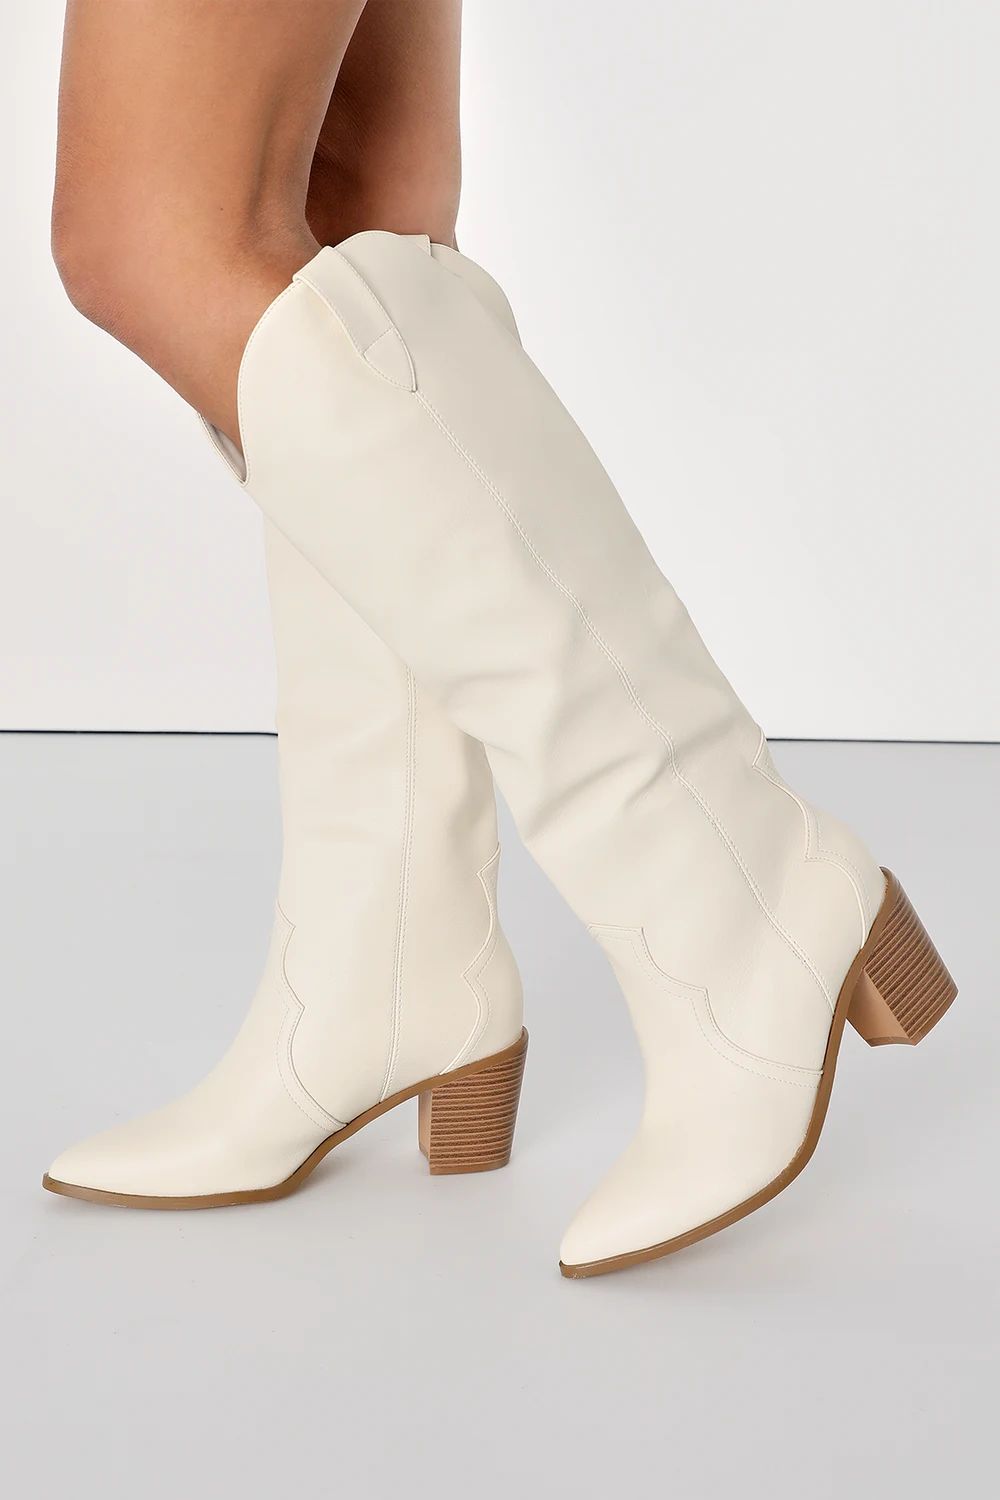 Ramona White Pointed-Toe Knee-High Western Boots | Lulus